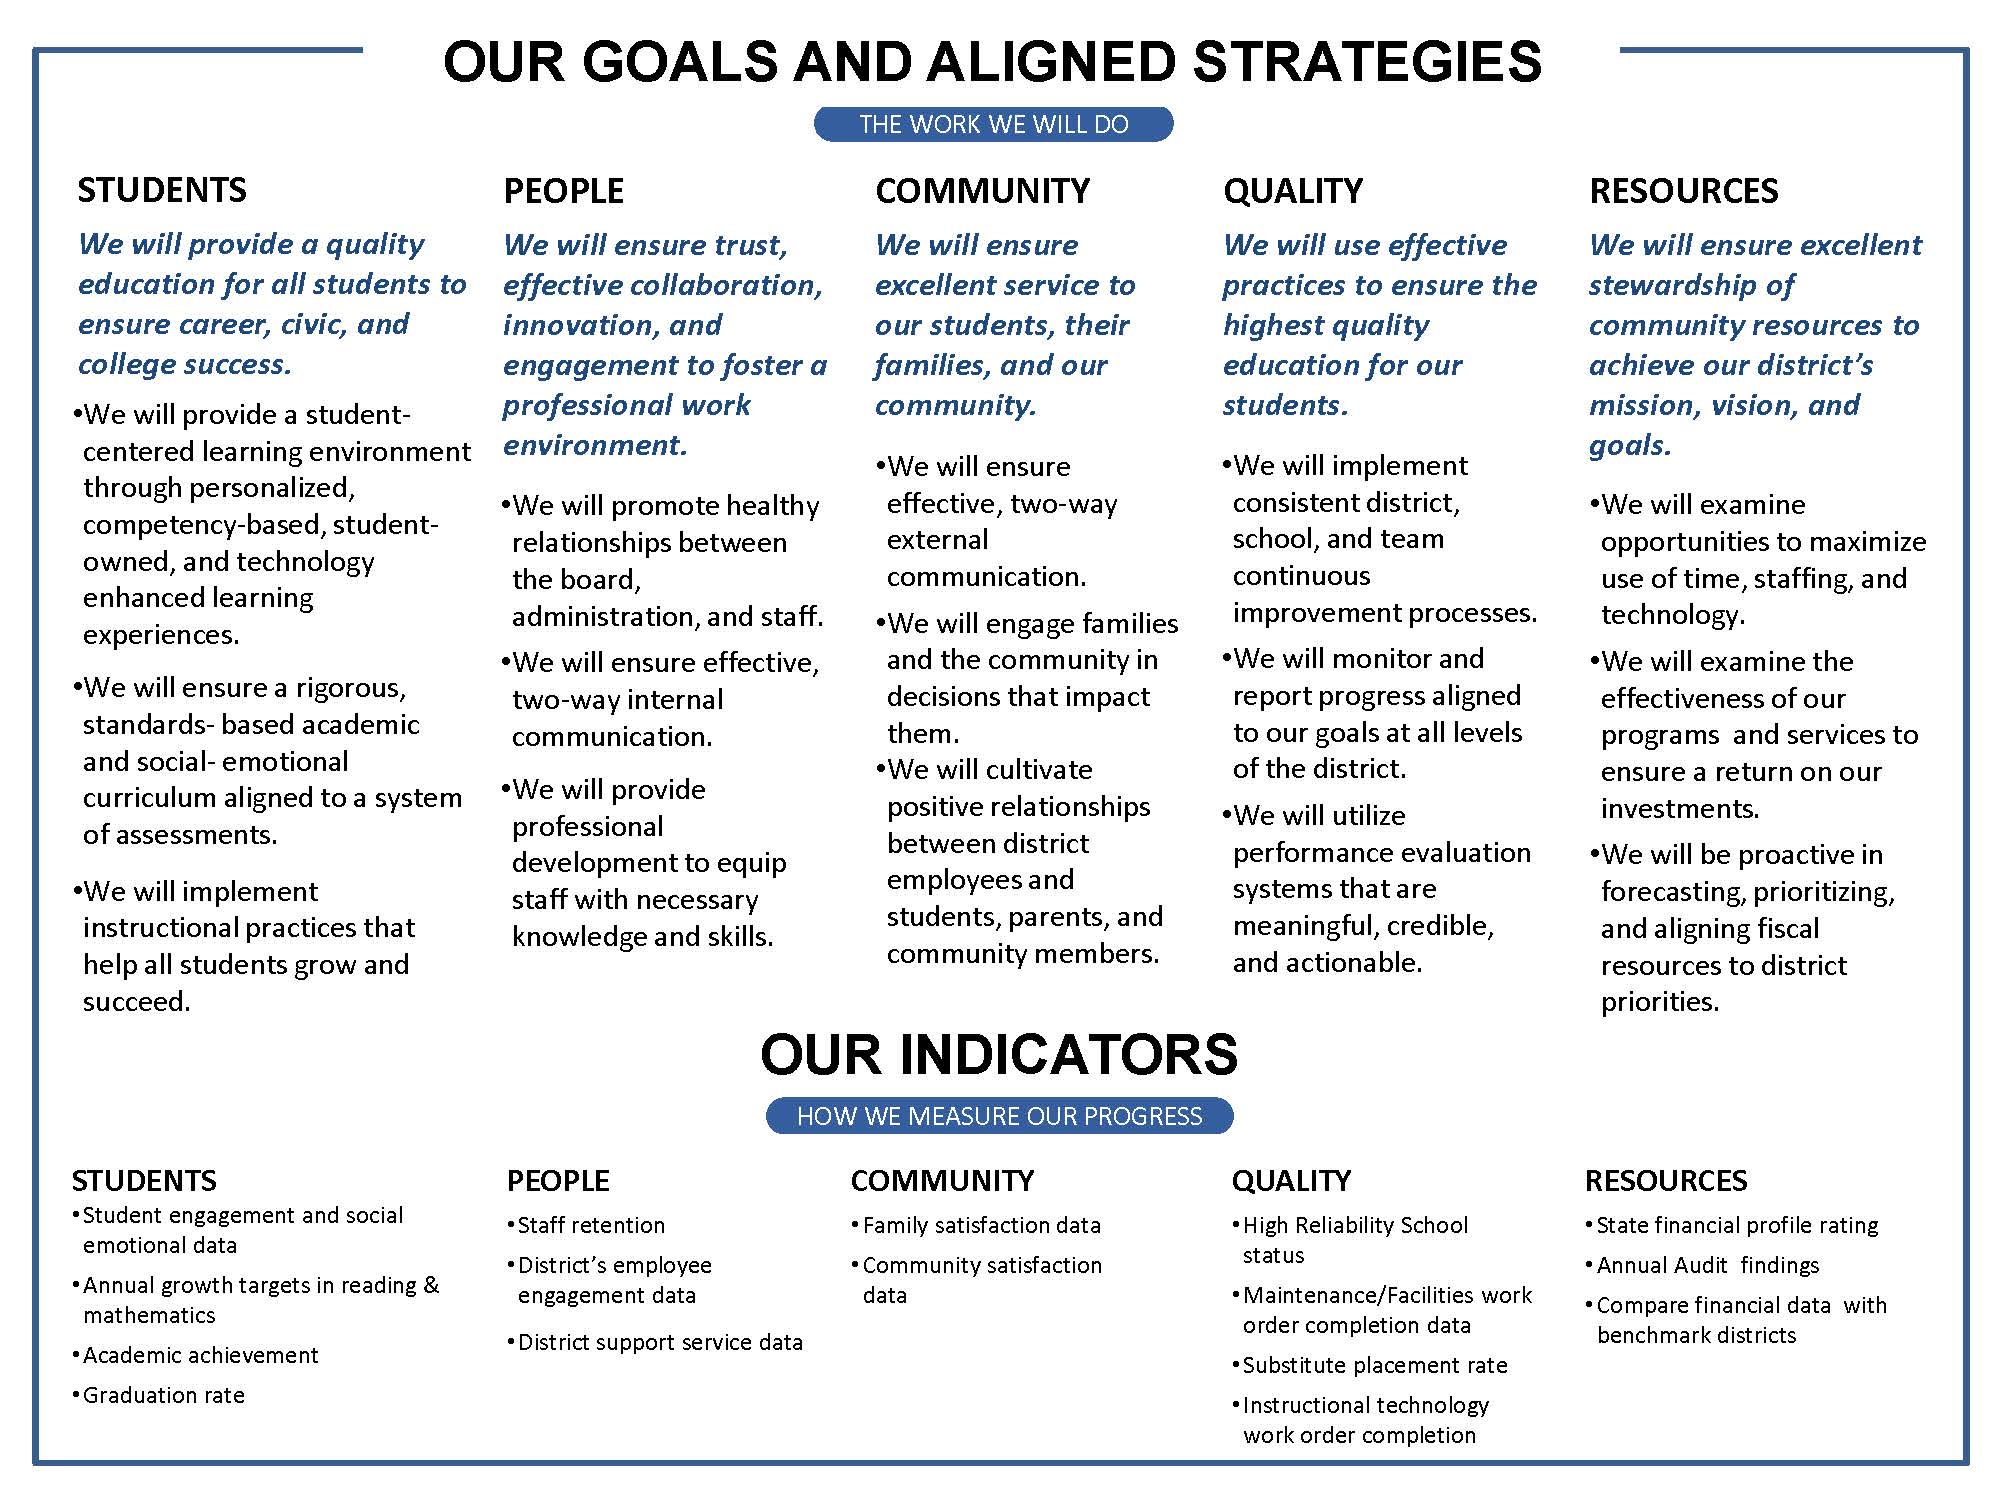 Goals, Aligned Strategies and Indicators